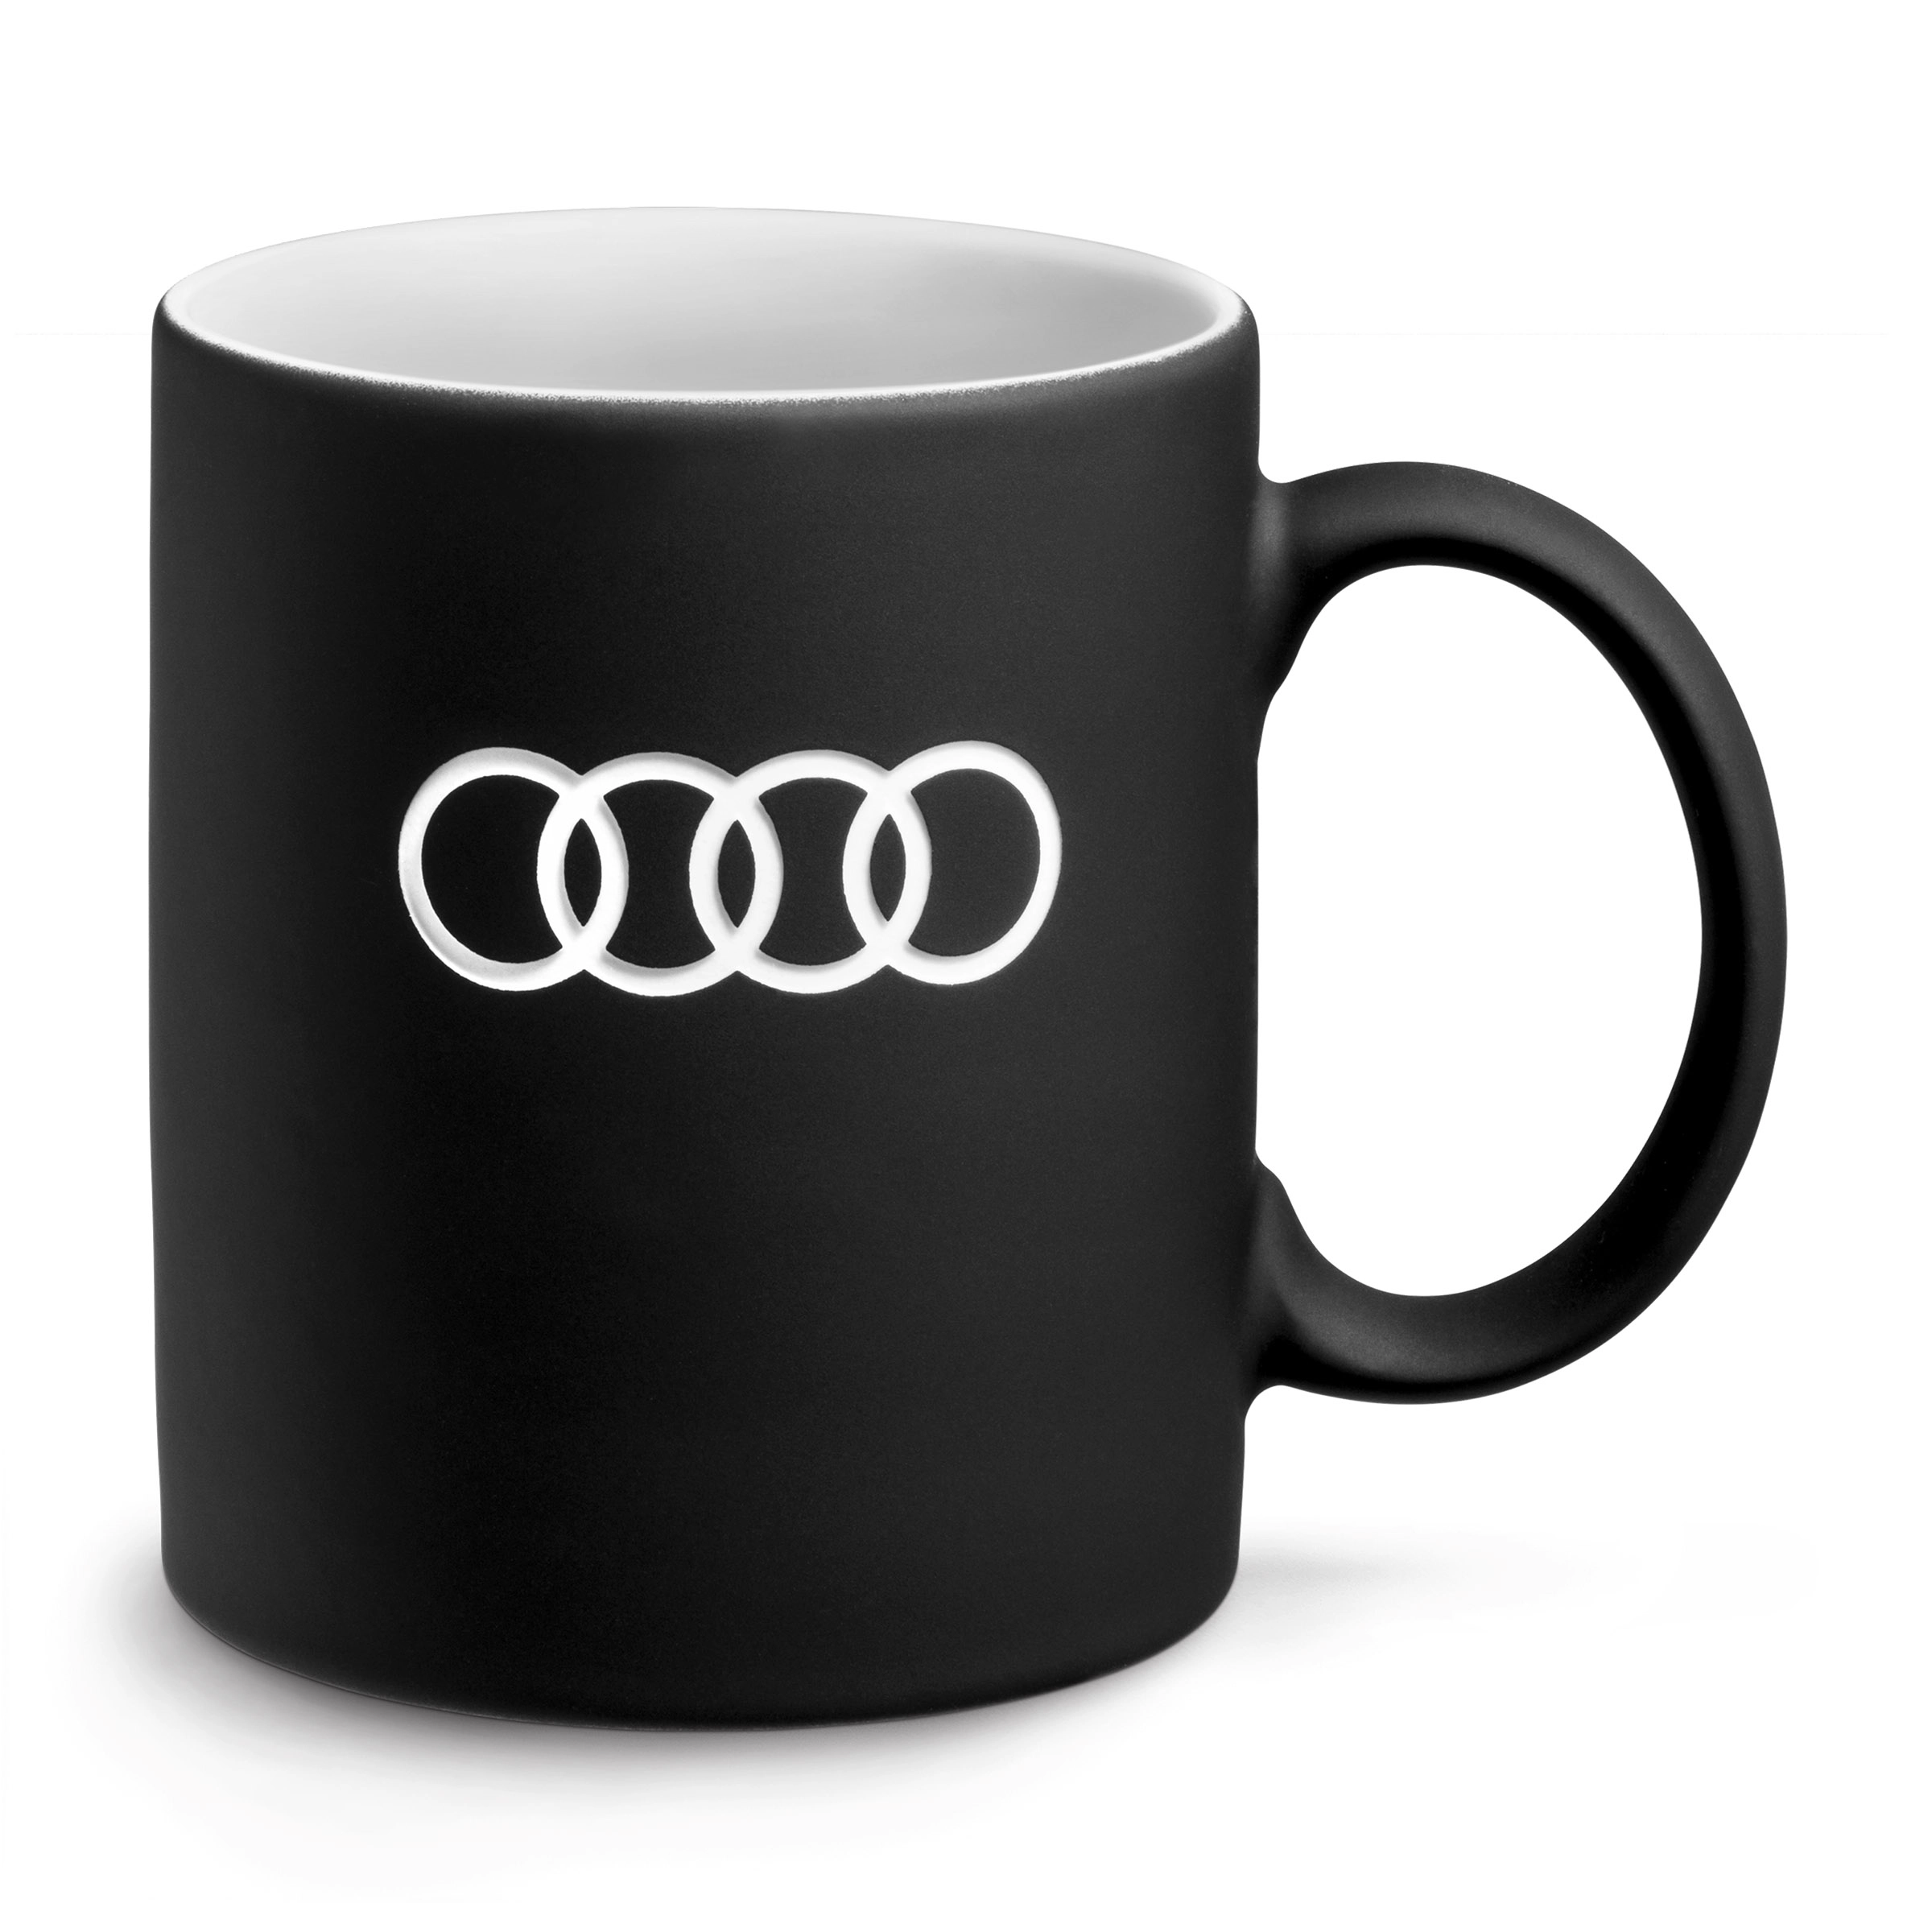 Audi Becher Ringe Kaffeebecher Teetasse Tasse schwarz 3291900500